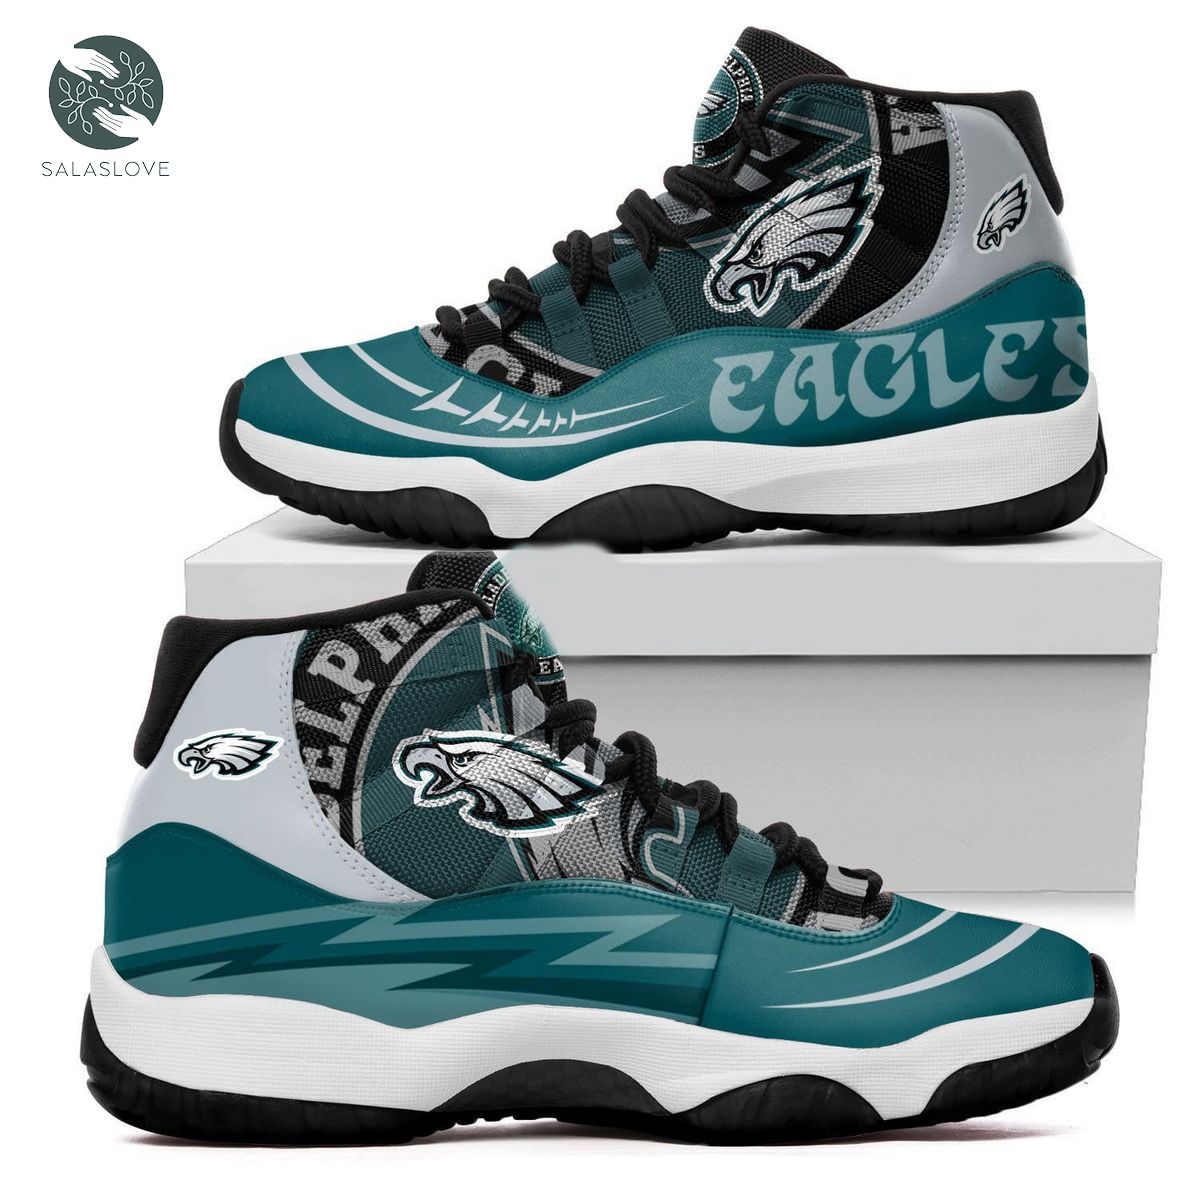 Philadelphia Eagles New Air Jordan 11


